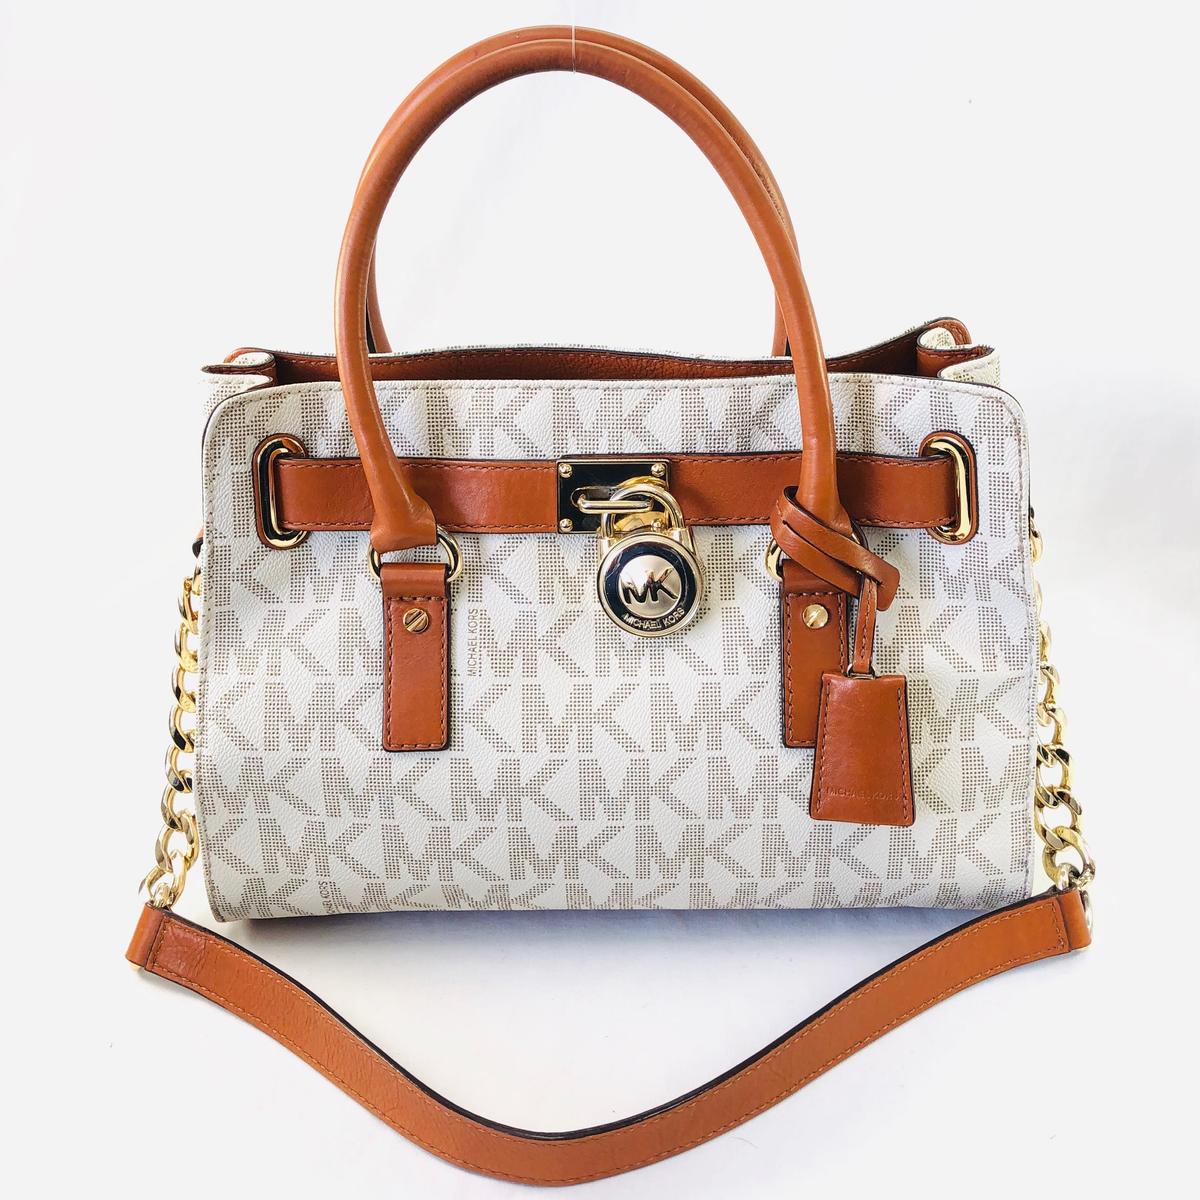 Authentic estate Michael Kors leather handbag